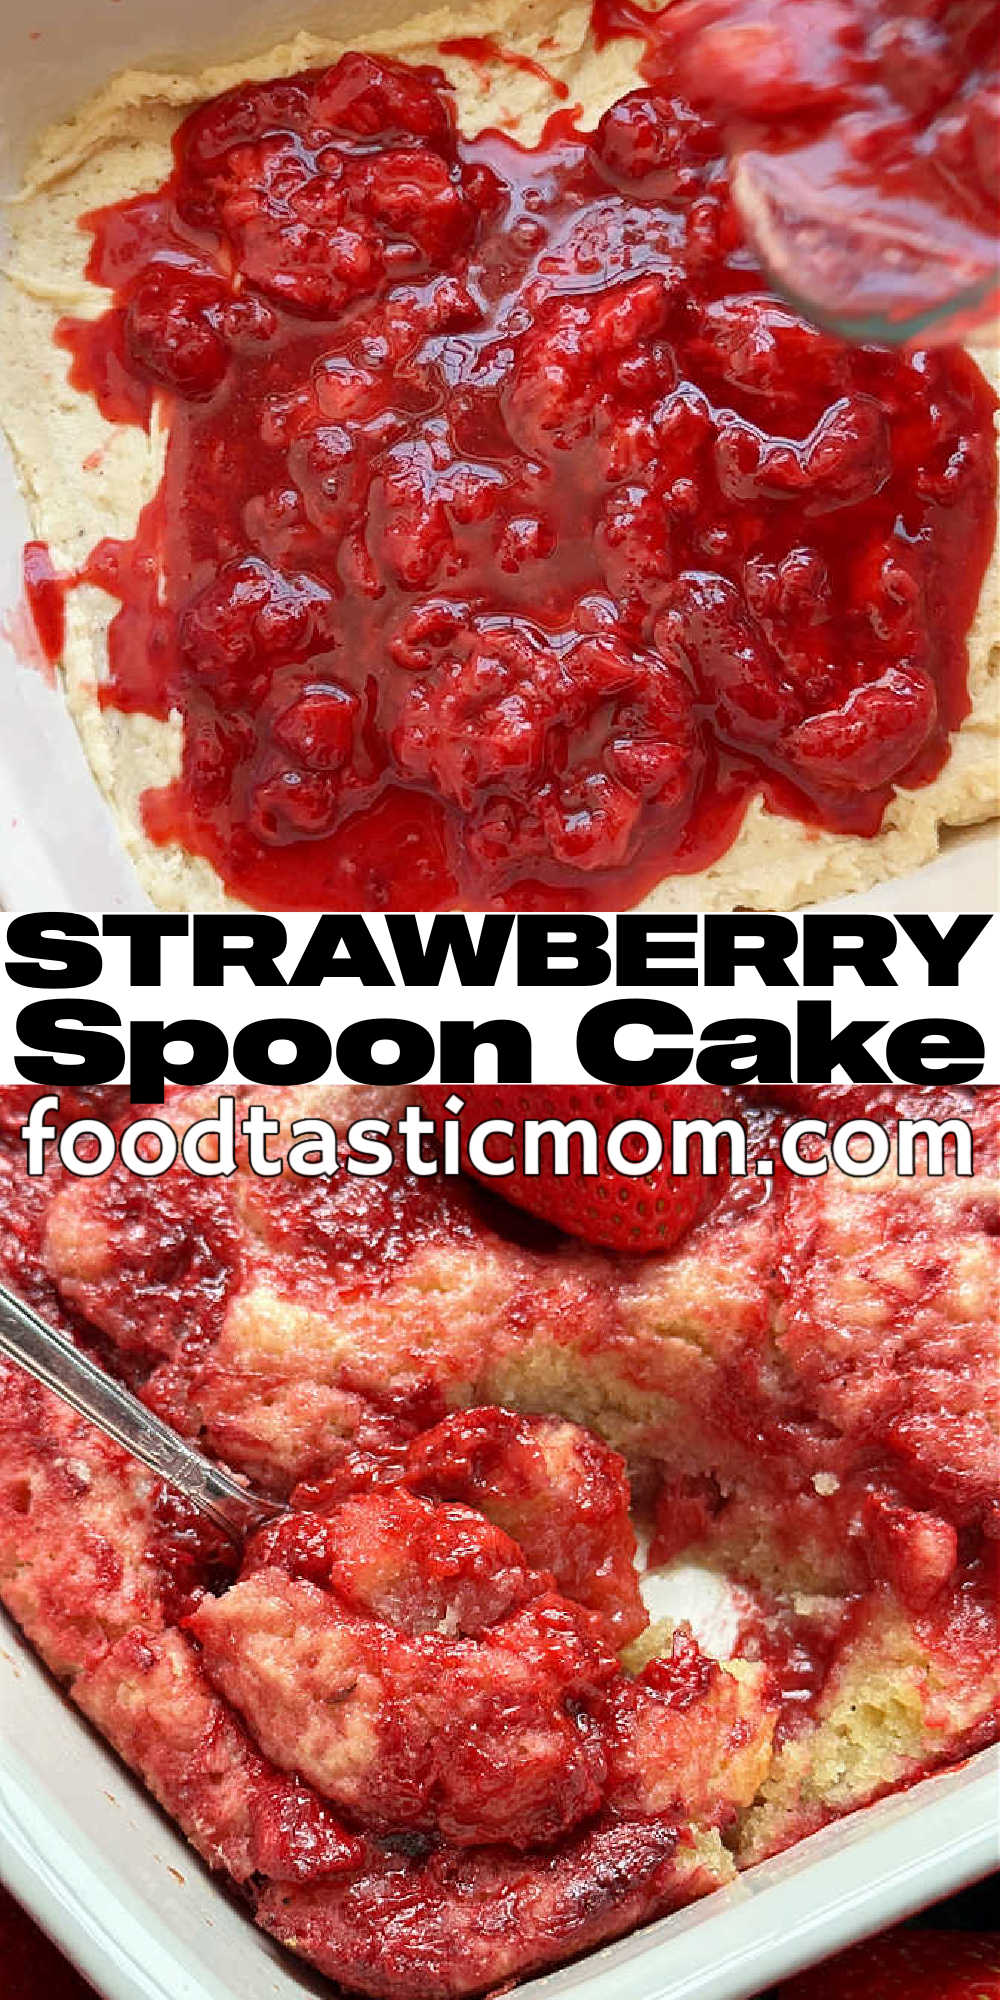 Strawberry Spoon Cake | Foodtastic Mom #strawberryspooncake #strawberrycake #cakerecipes via @foodtasticmom